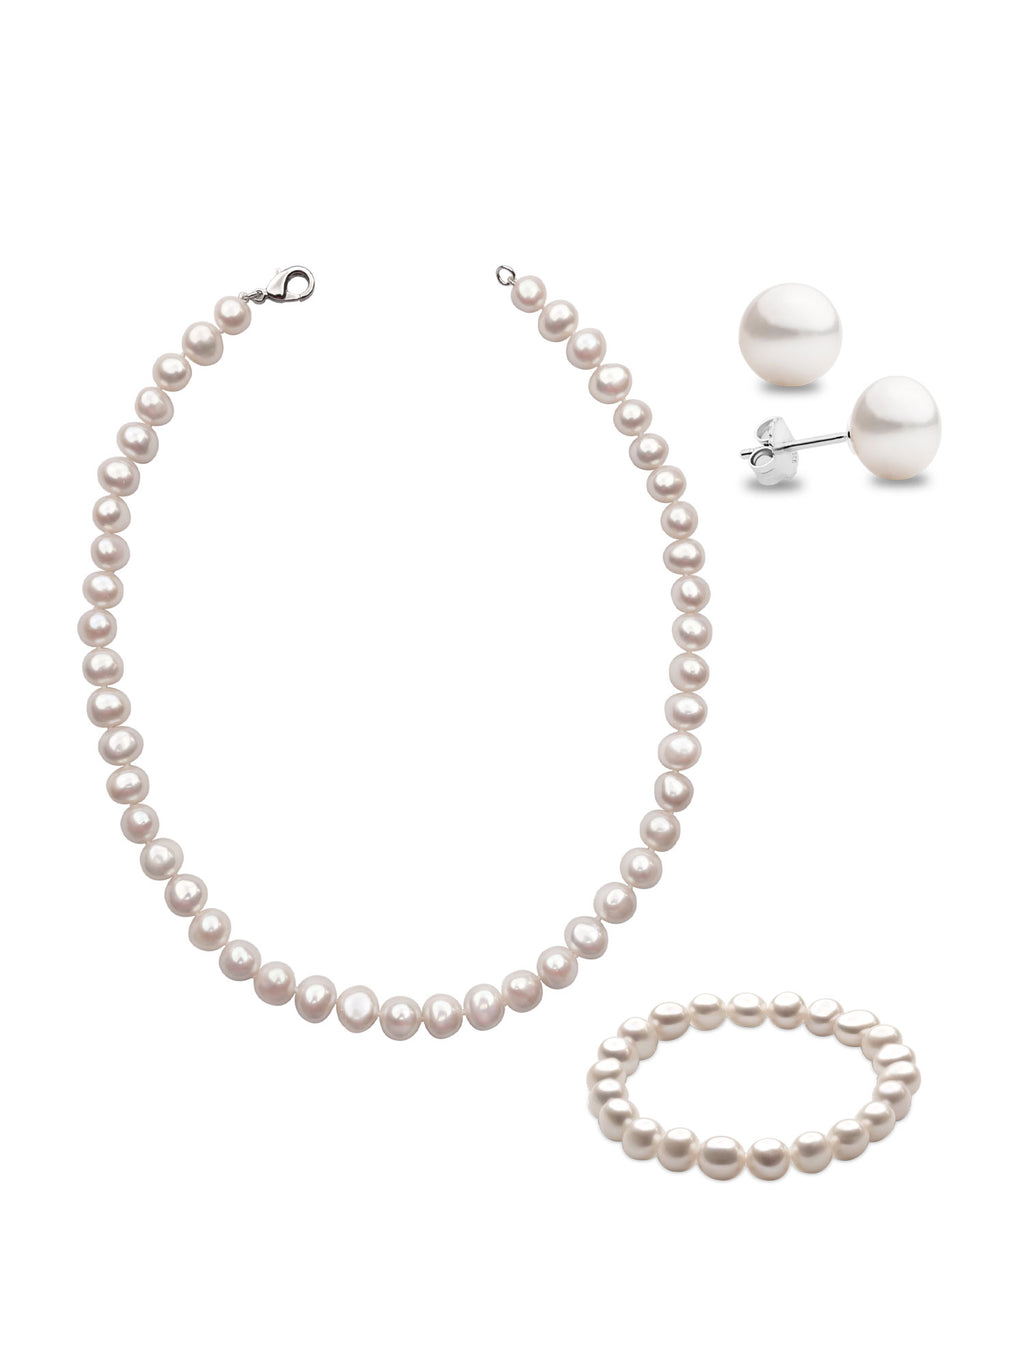 Double Strand Pearl Necklace, Bracelet & Earring Set